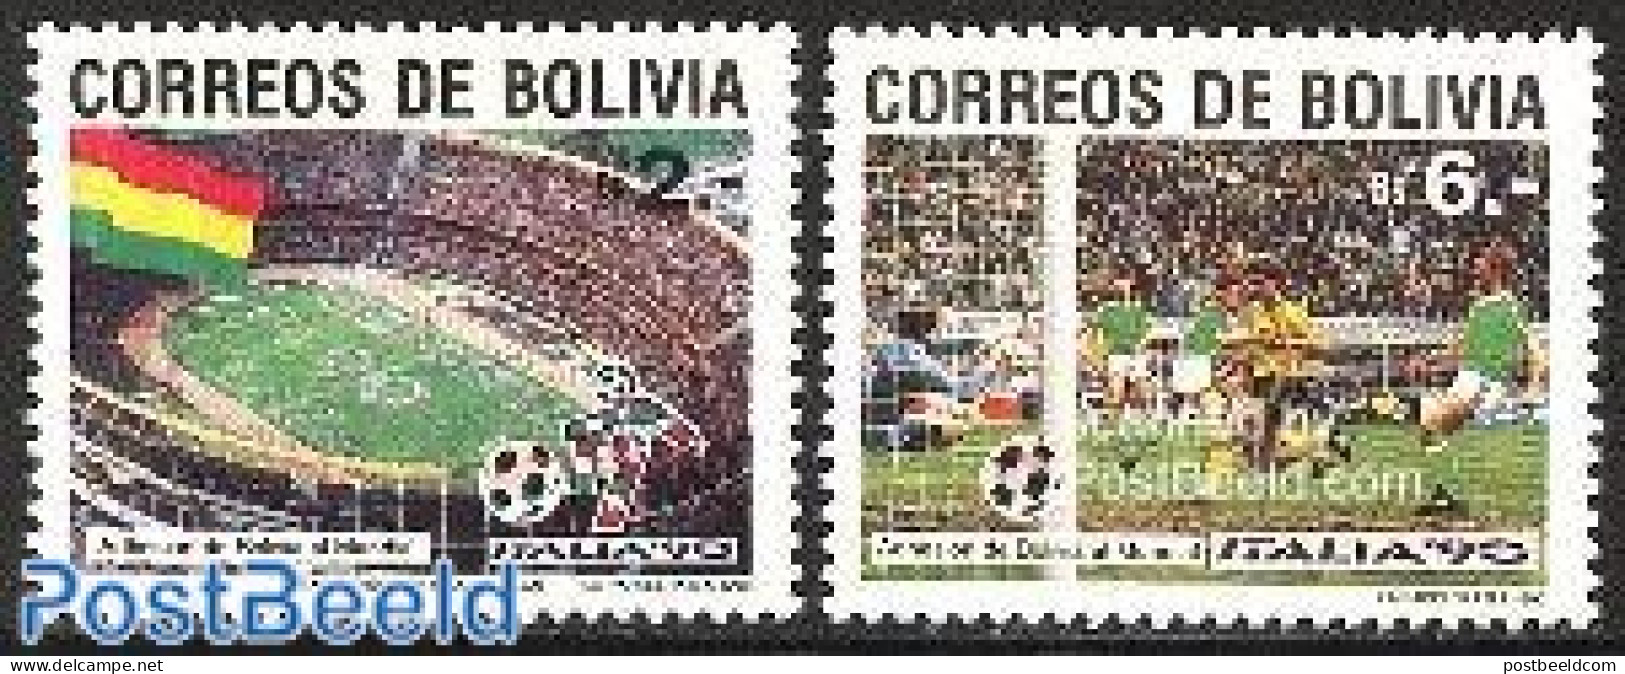 Bolivia 1990 World Cup Football 2v, Mint NH, Sport - Football - Bolivia